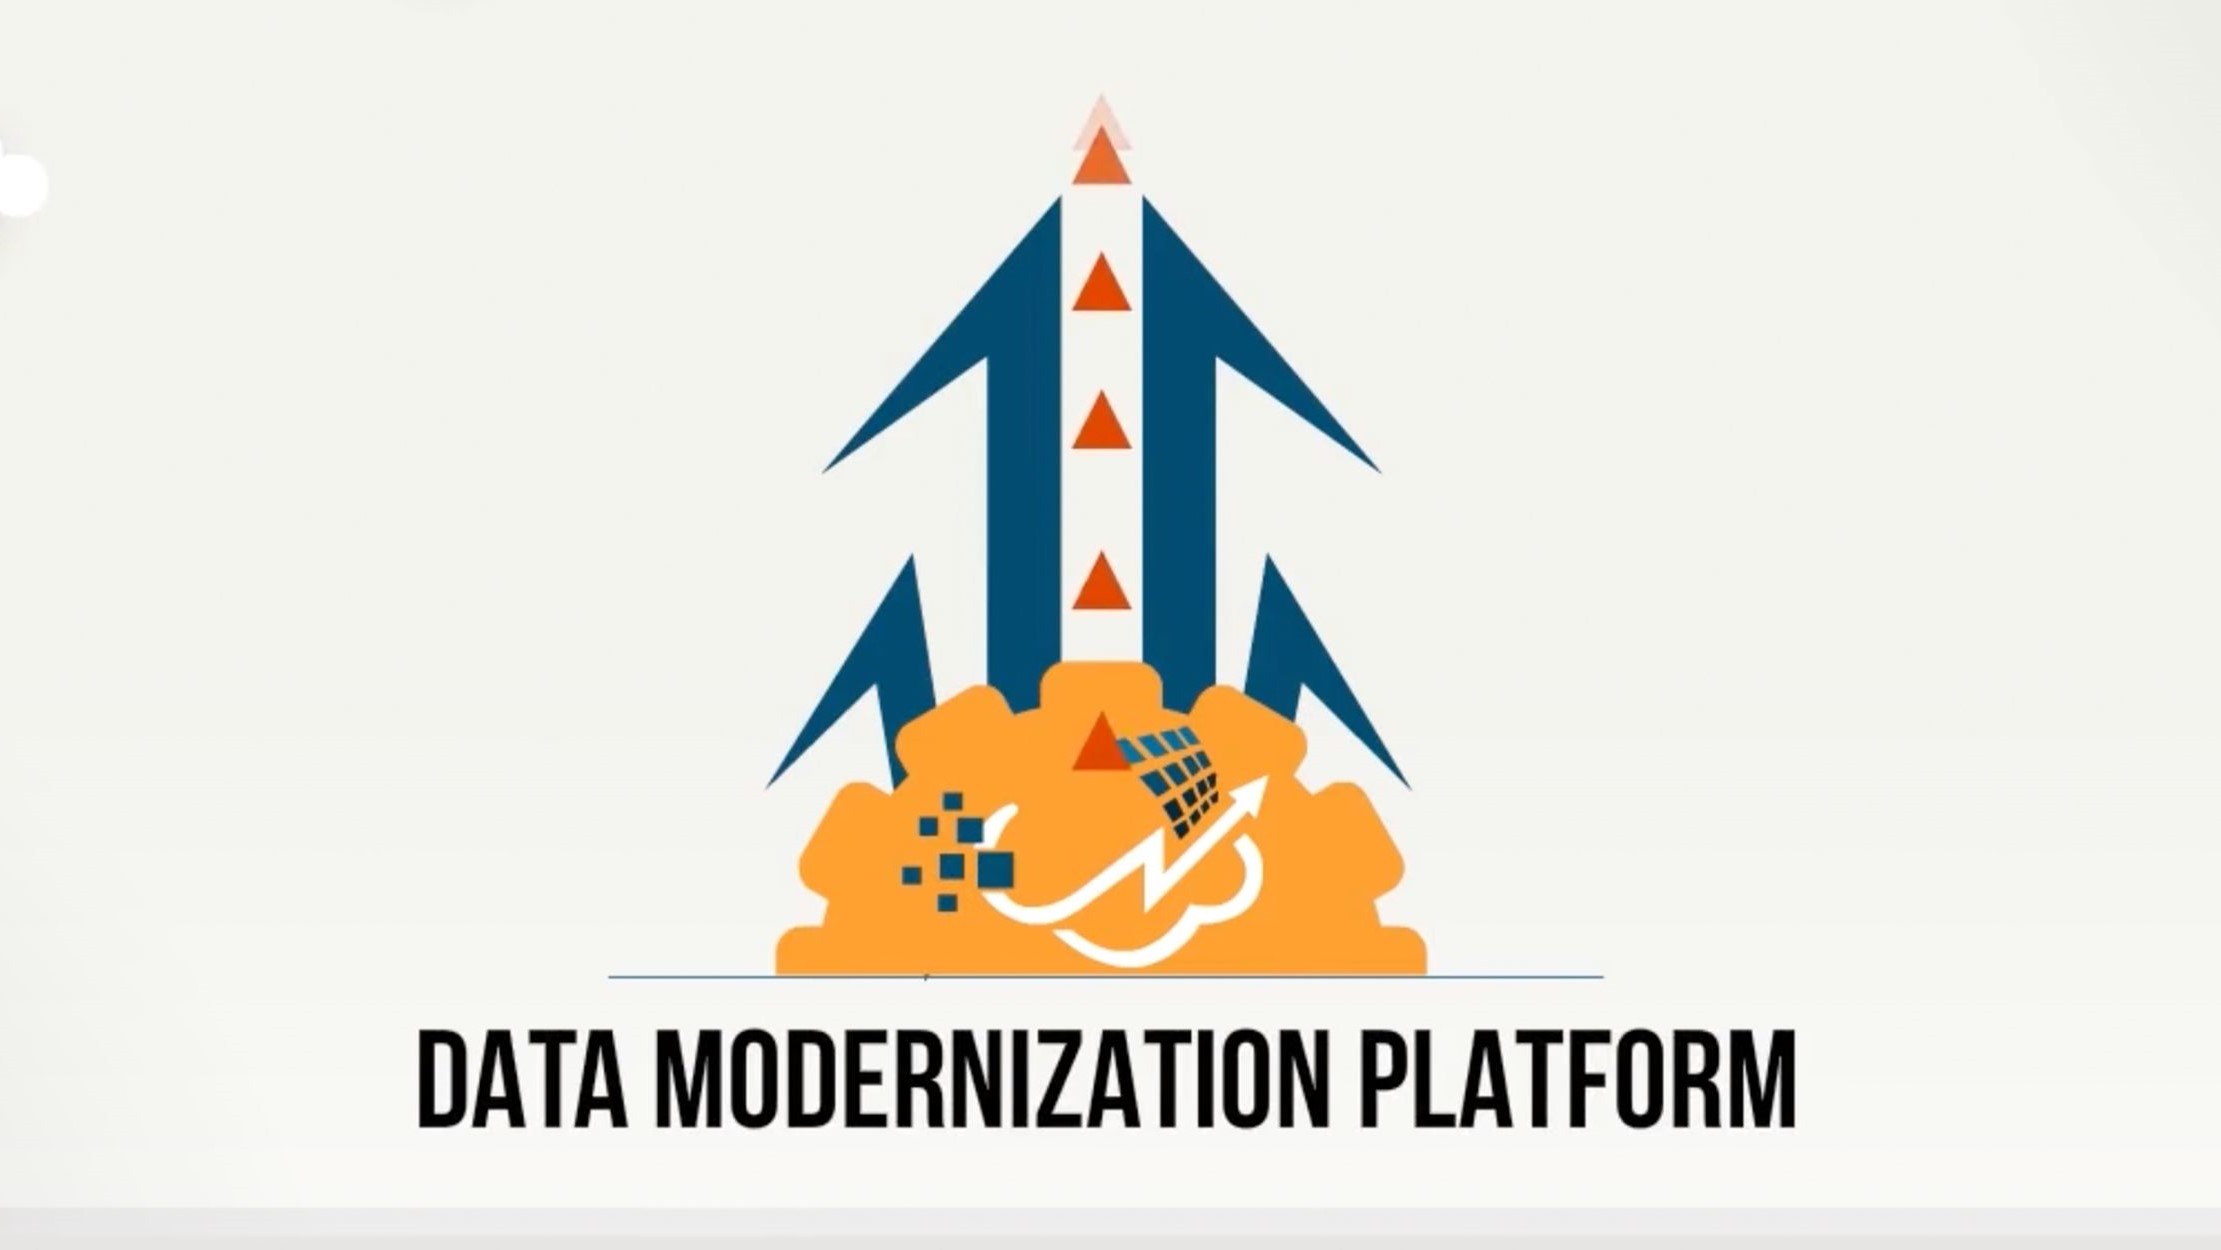 Hexaware’s Data Modernization Platform